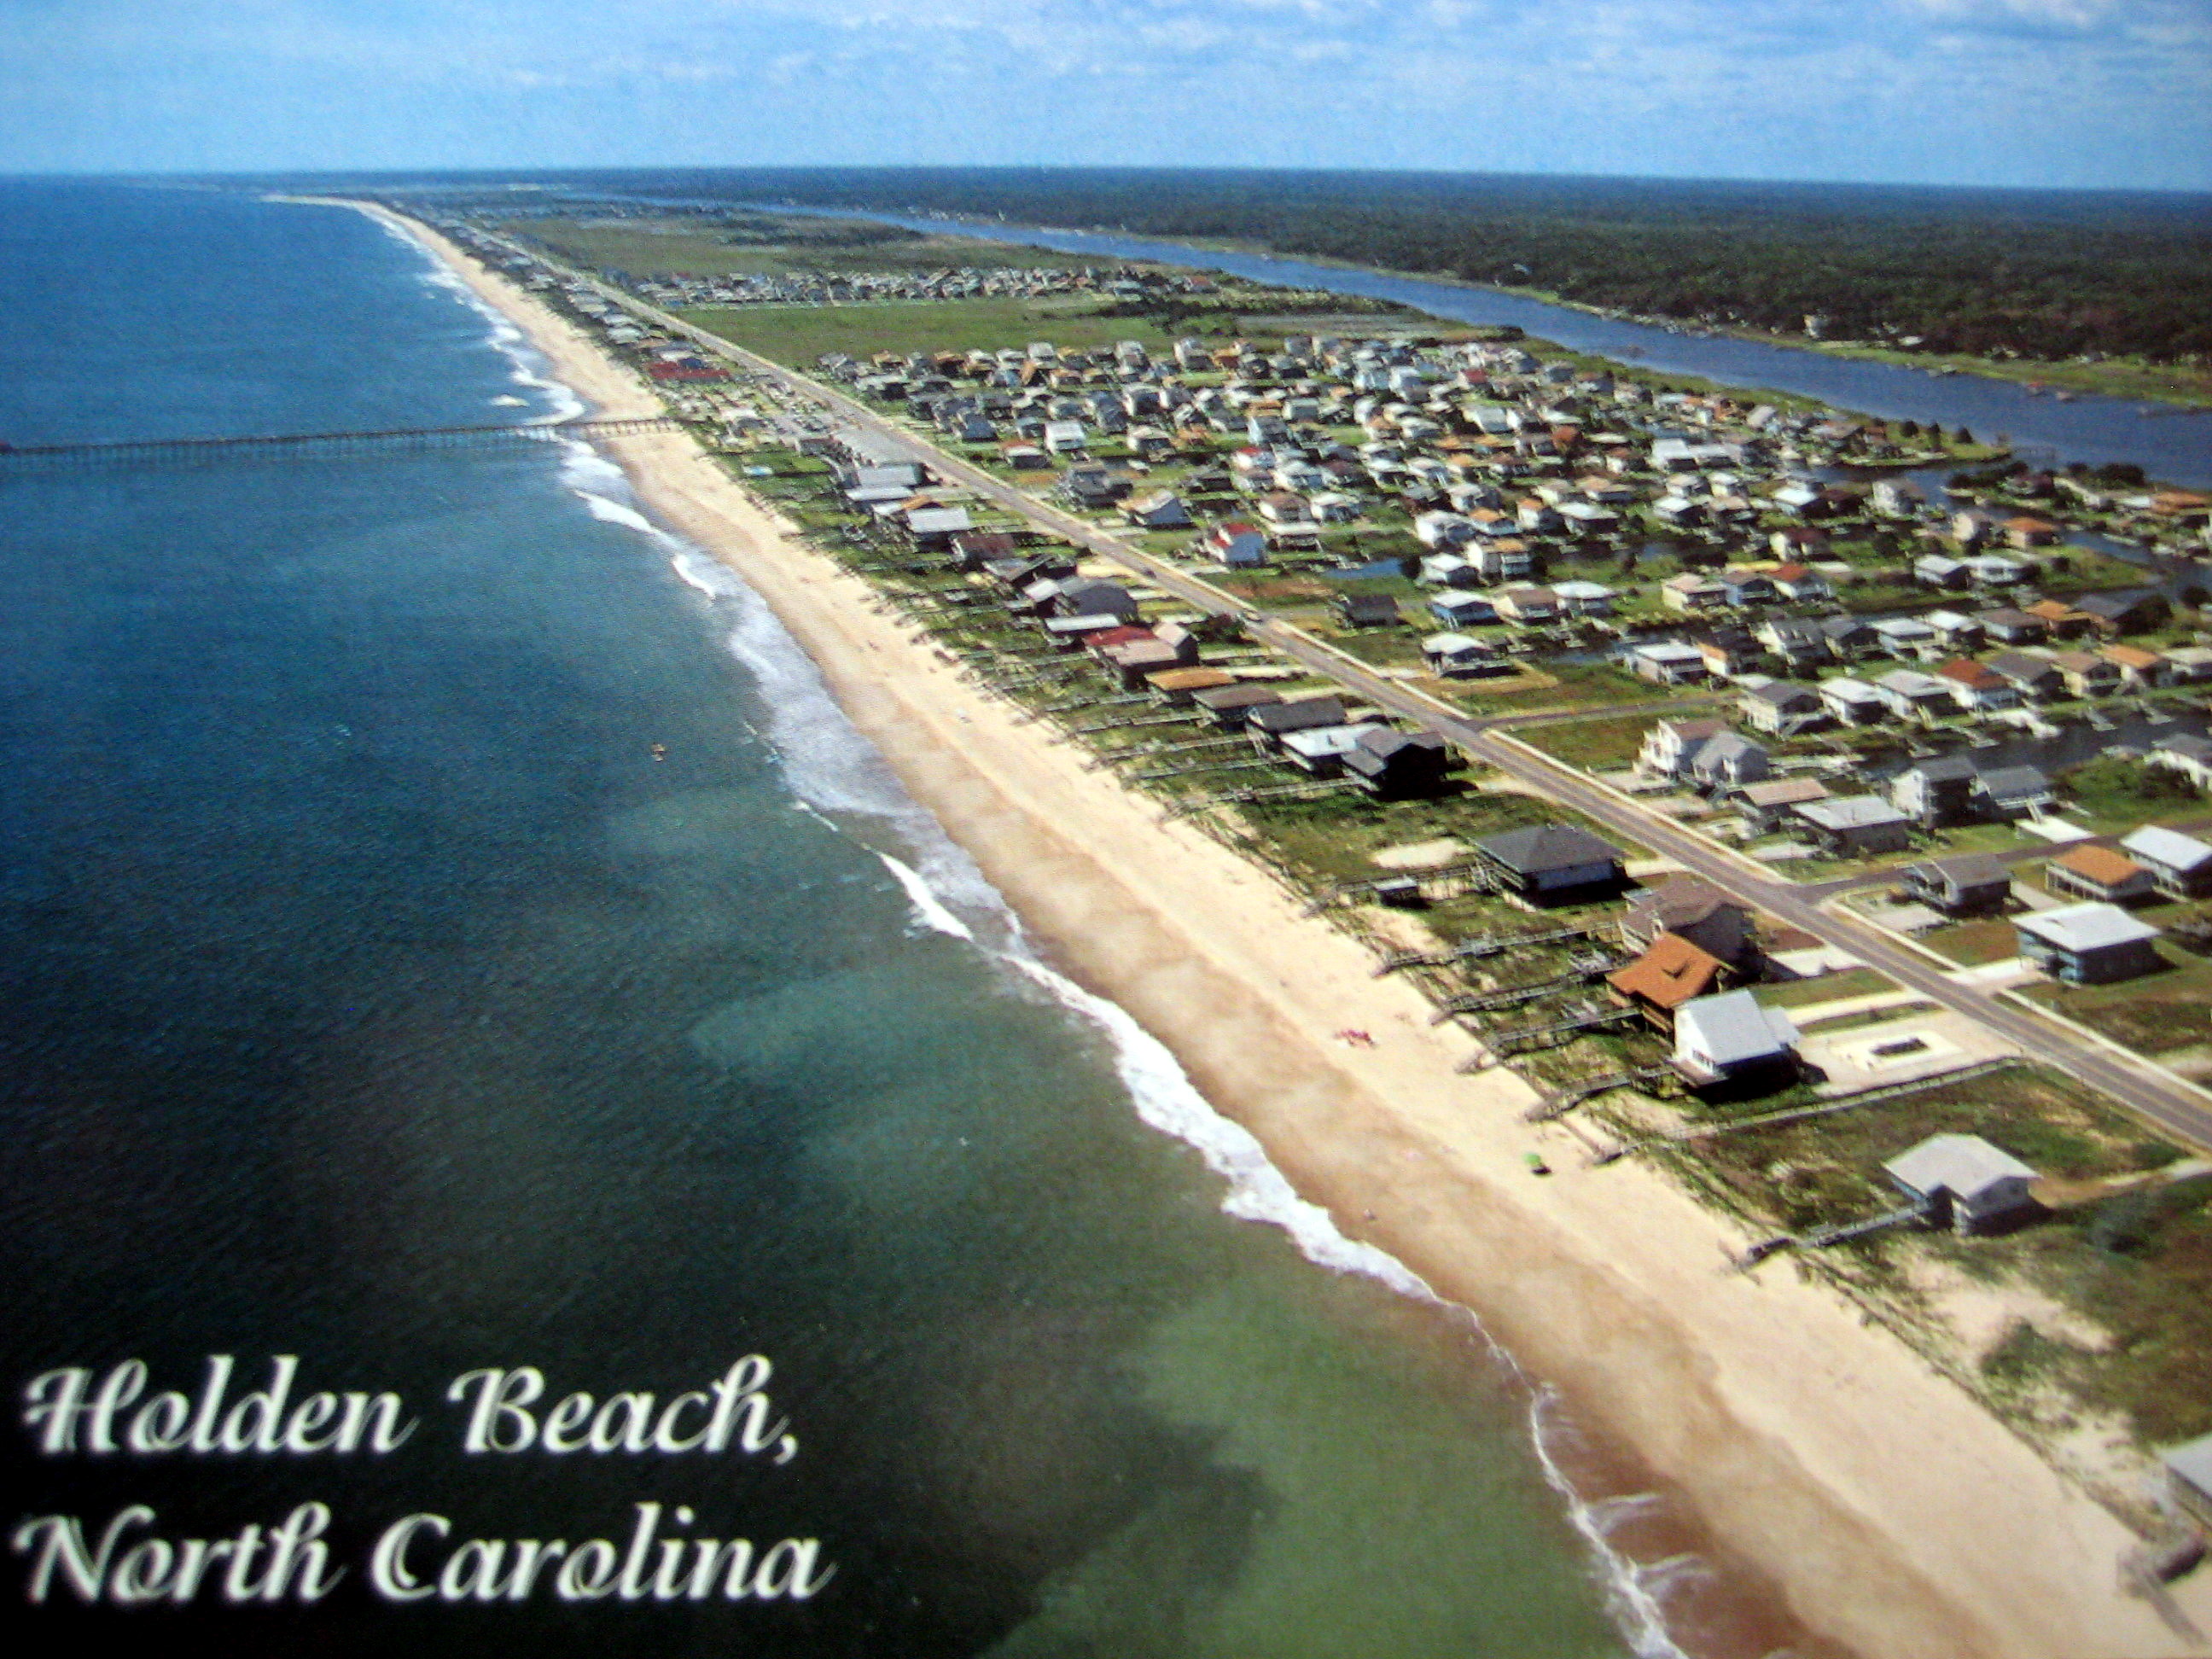 5th leg: Holden Beach | Going Coastal